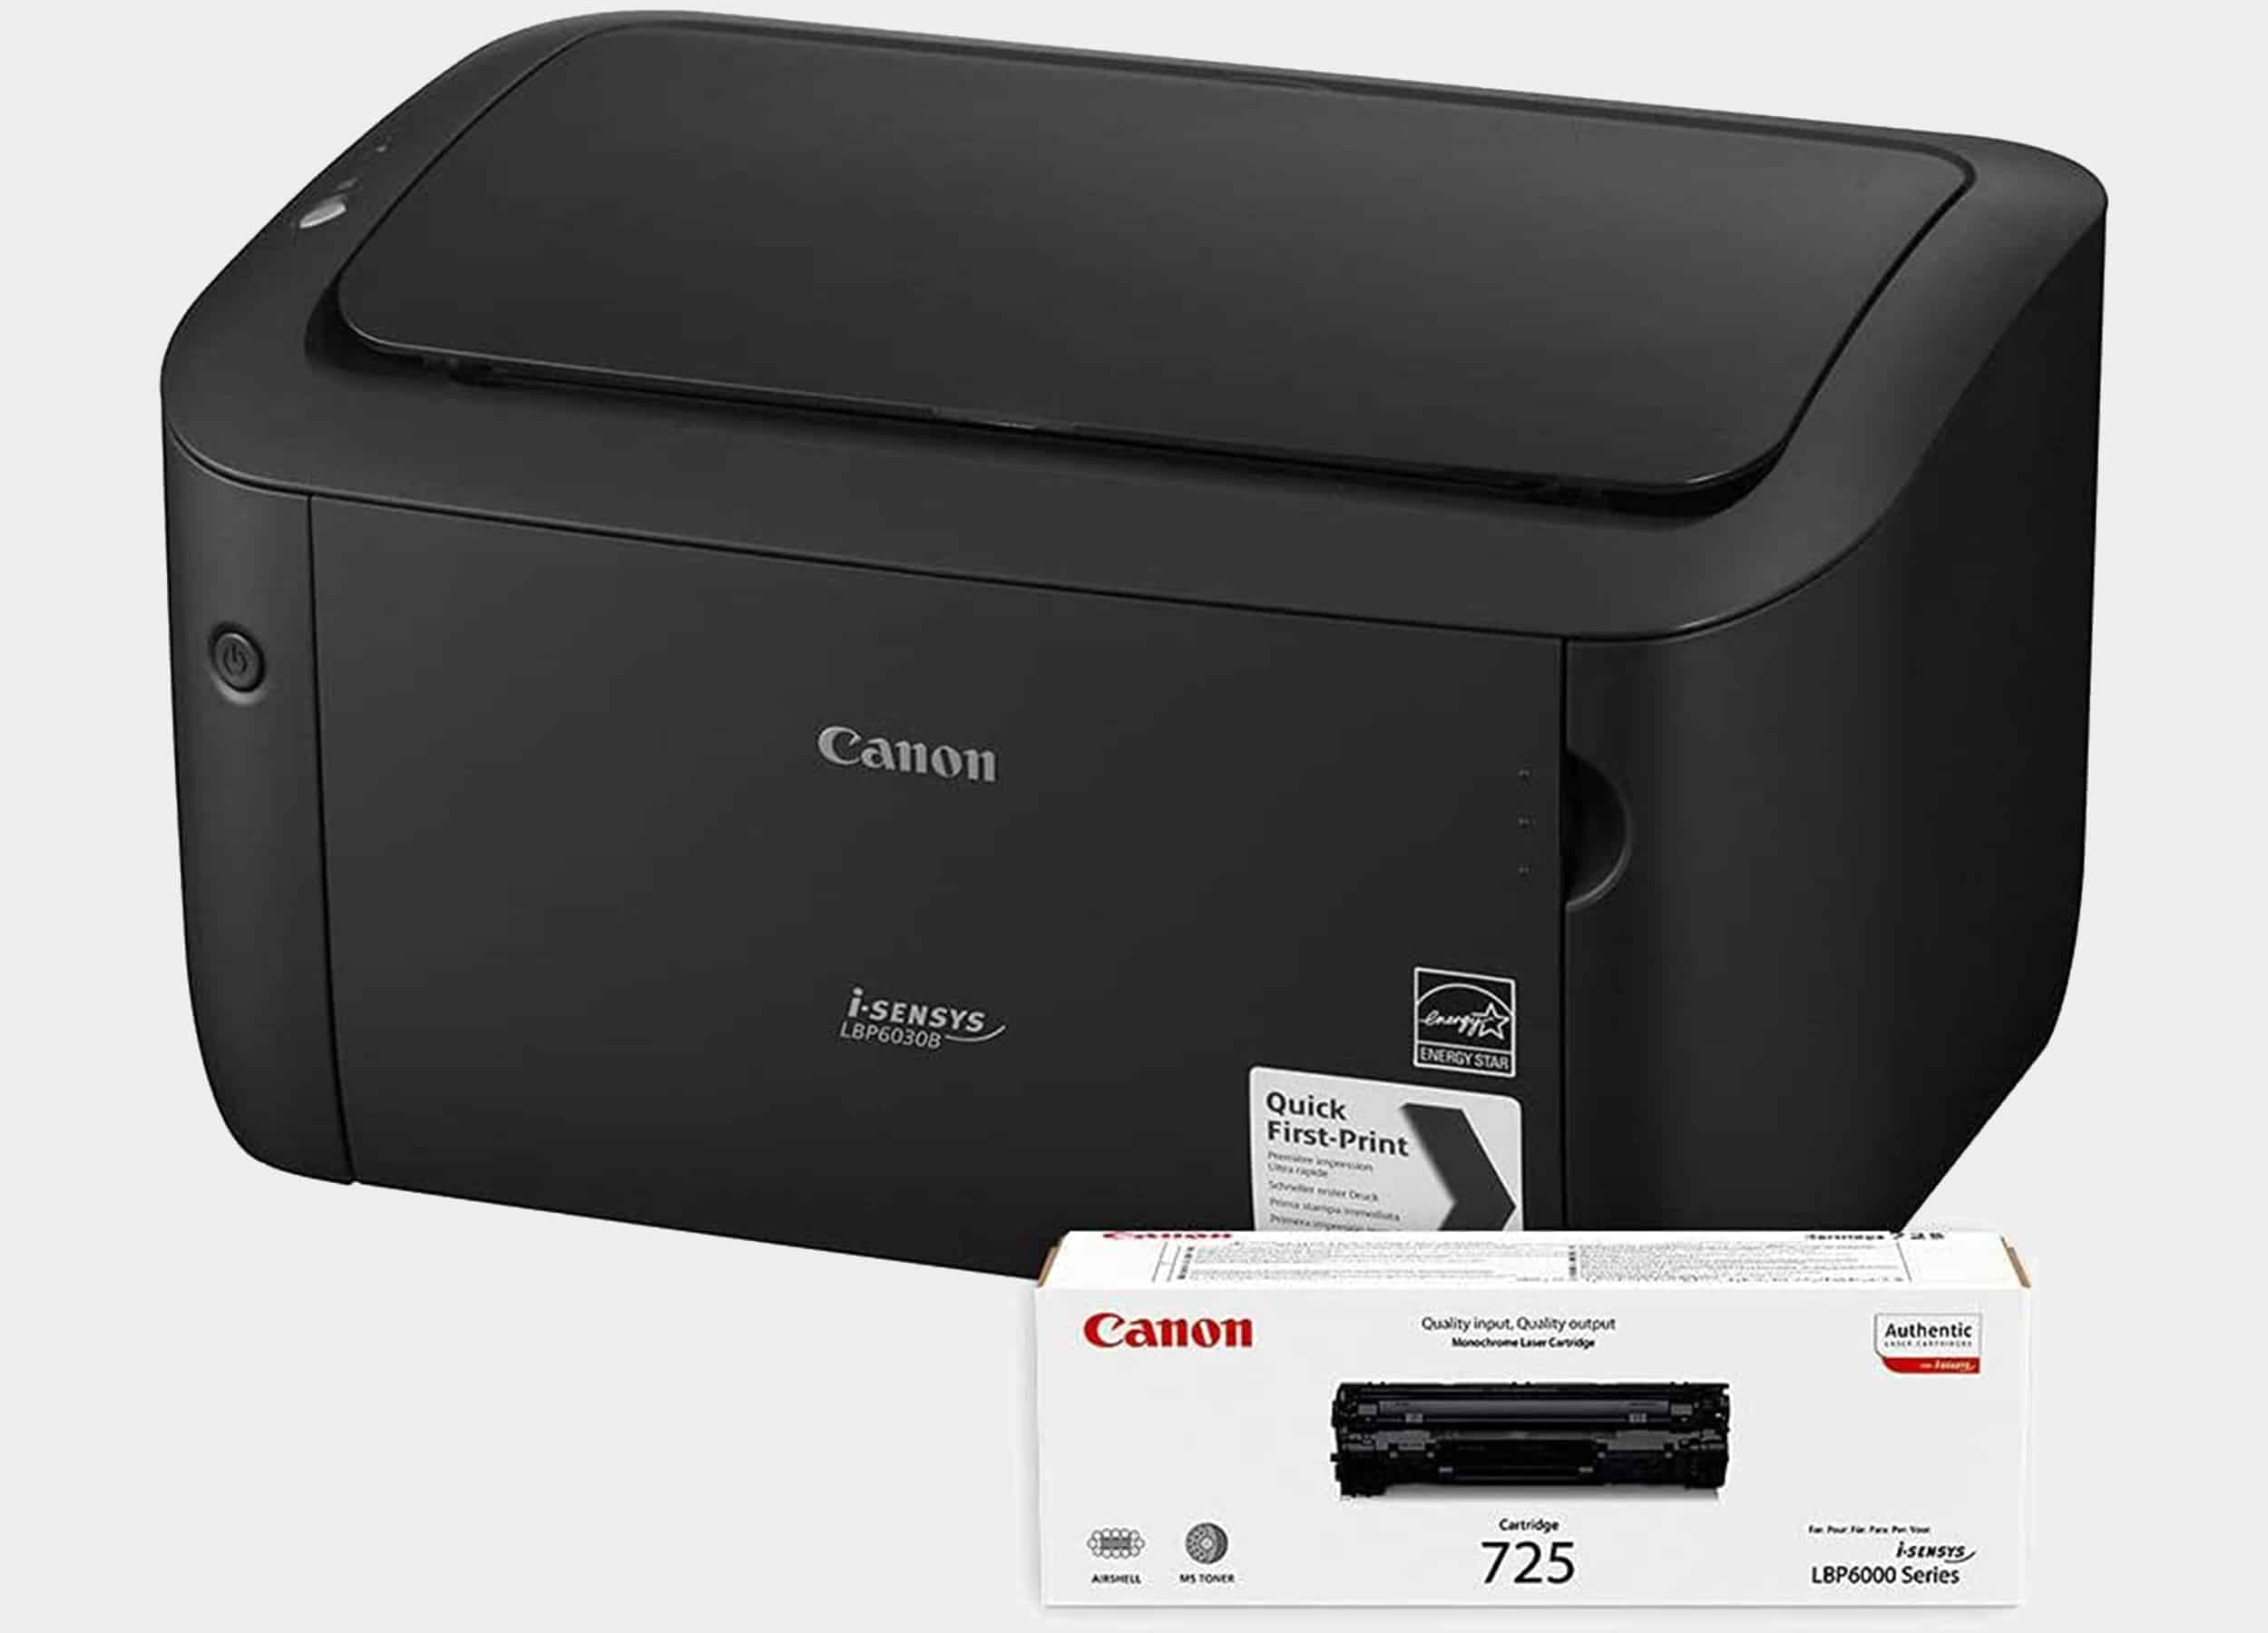 Canon i-SENSYS LBP6030B Laser Printer